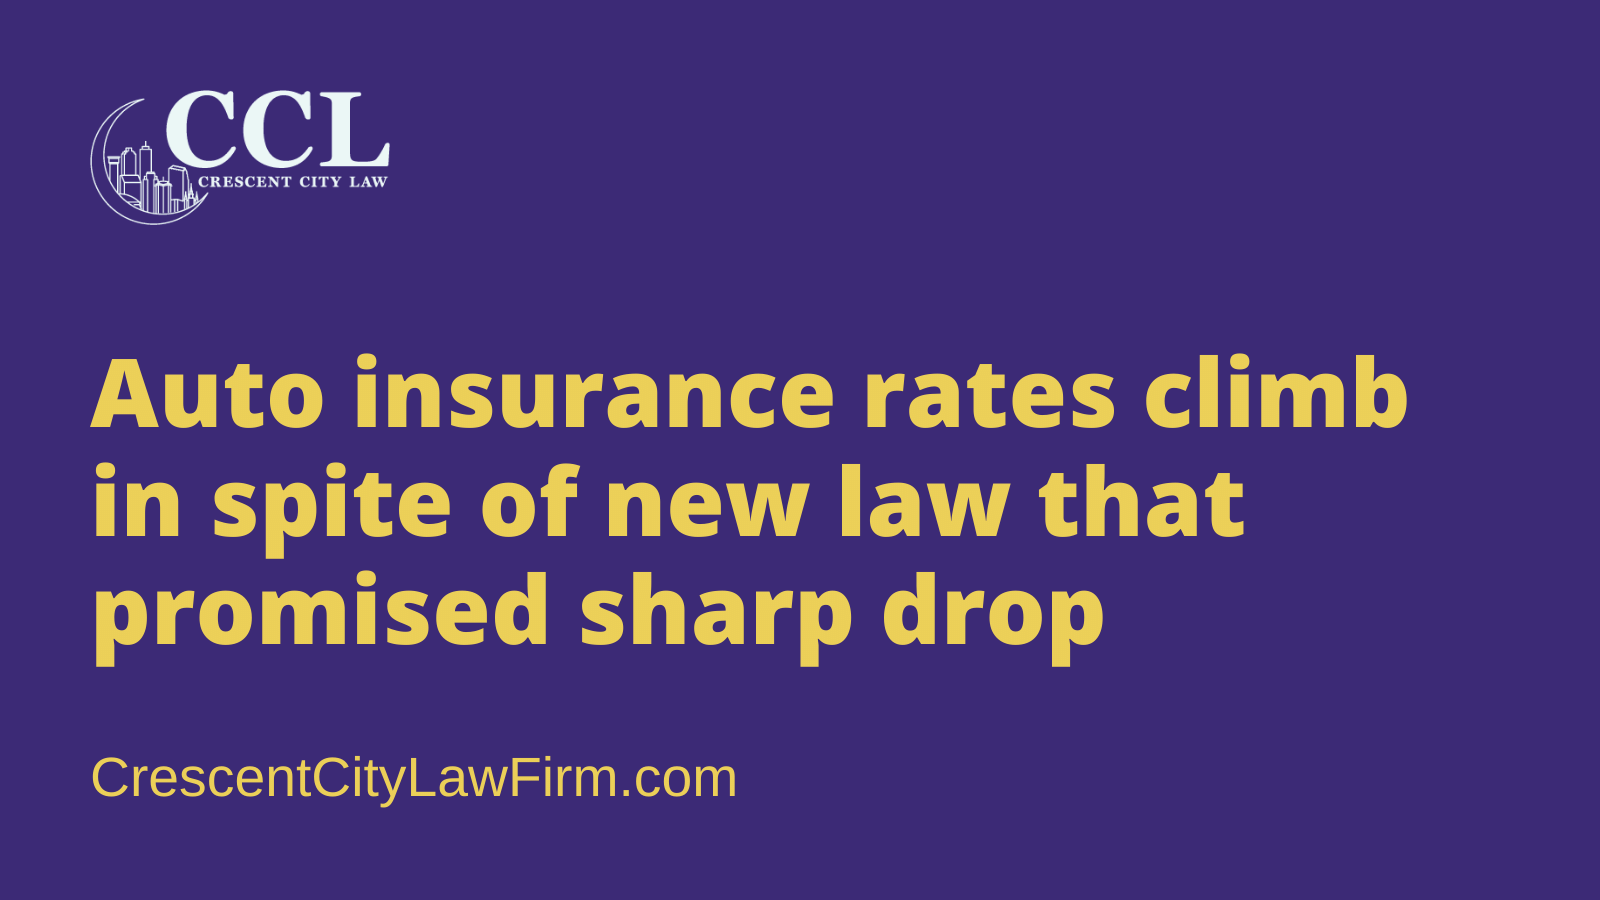 car insurance rates new oreans - crescent city law firm - new orleans la